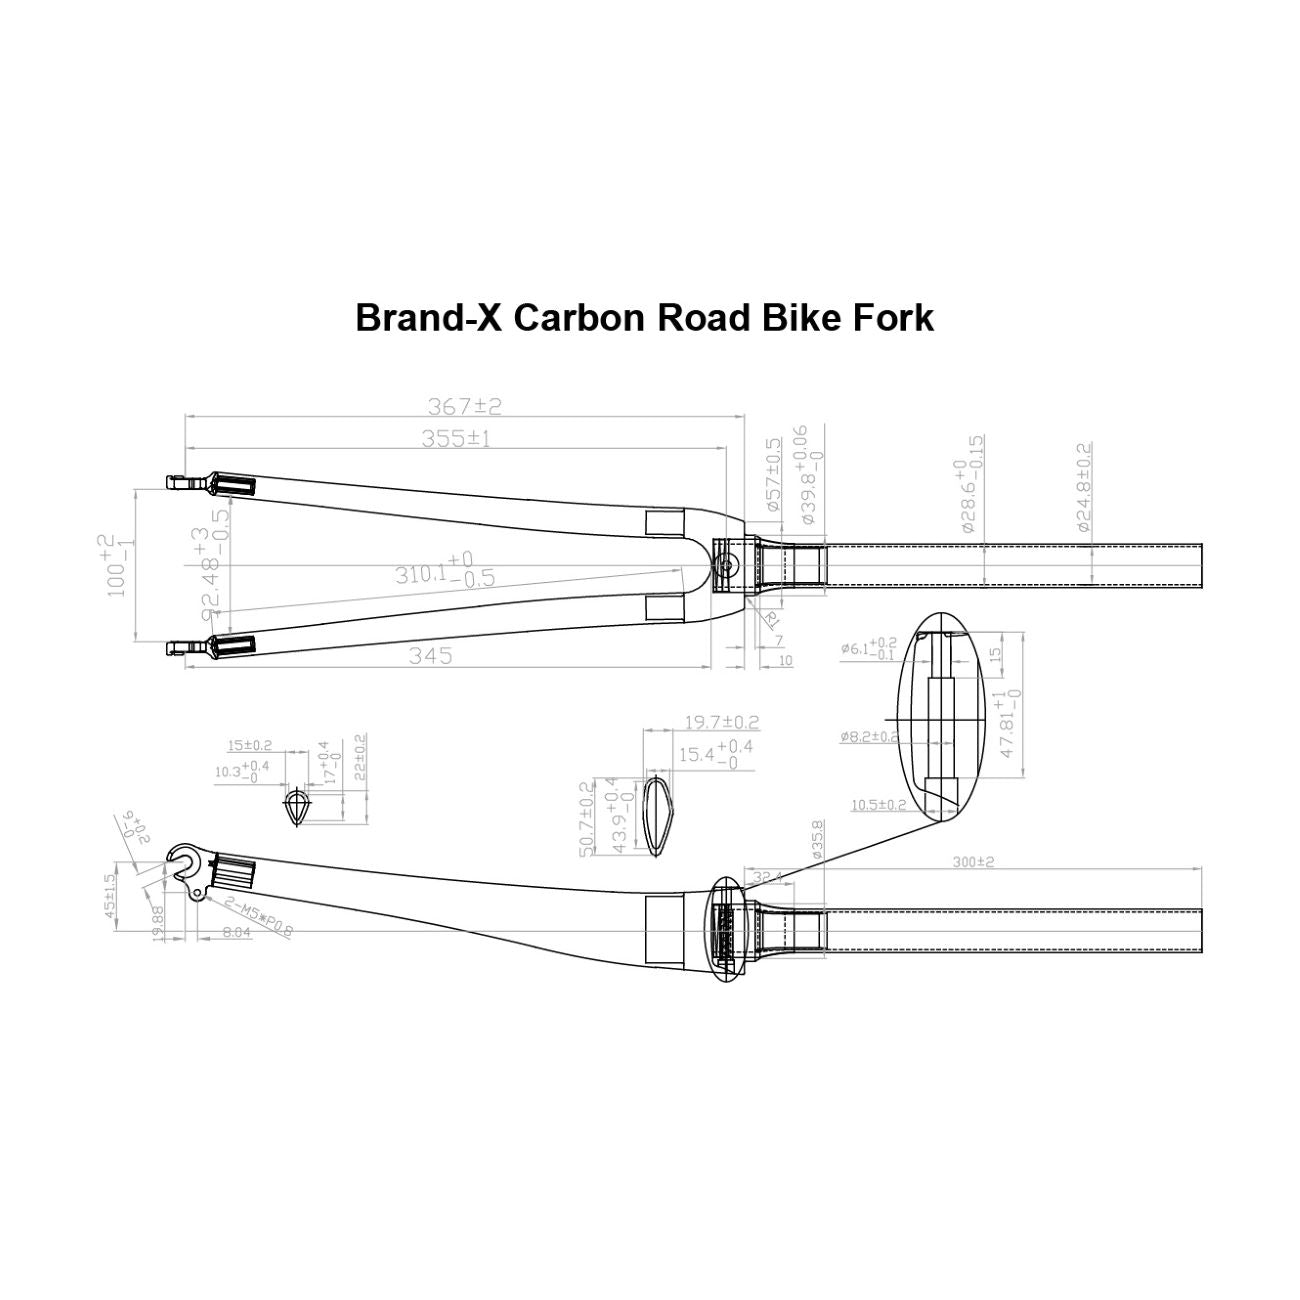 Brand-X Carbon Road Bike Fork